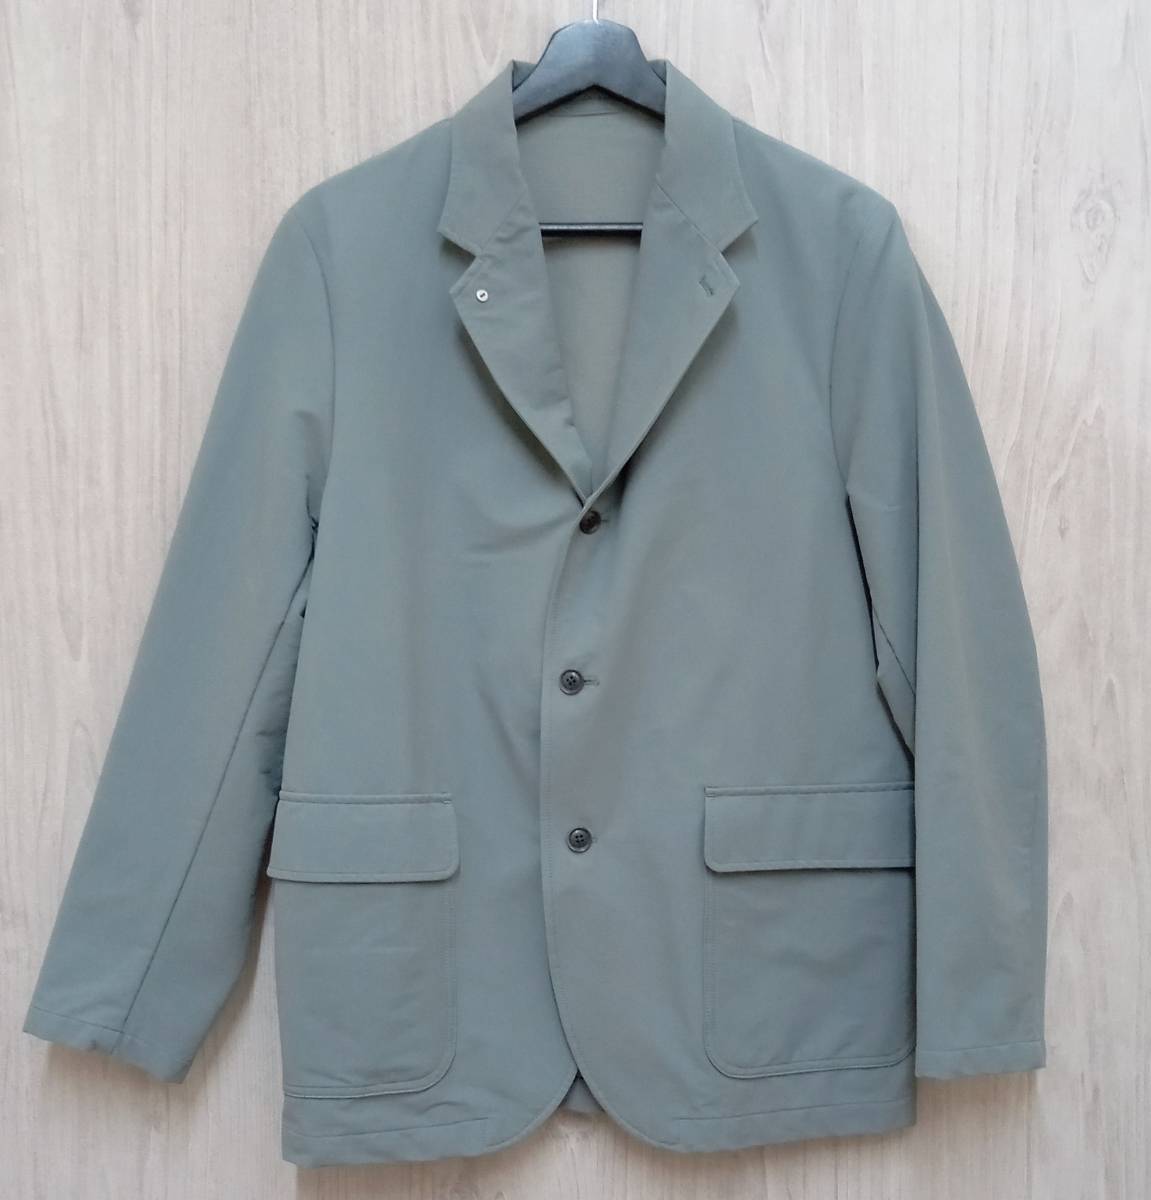 nanamica/na Nami ka/ tailored jacket /SUAS120/BREATH TUNE Club Jacket/ серый /XS размер 